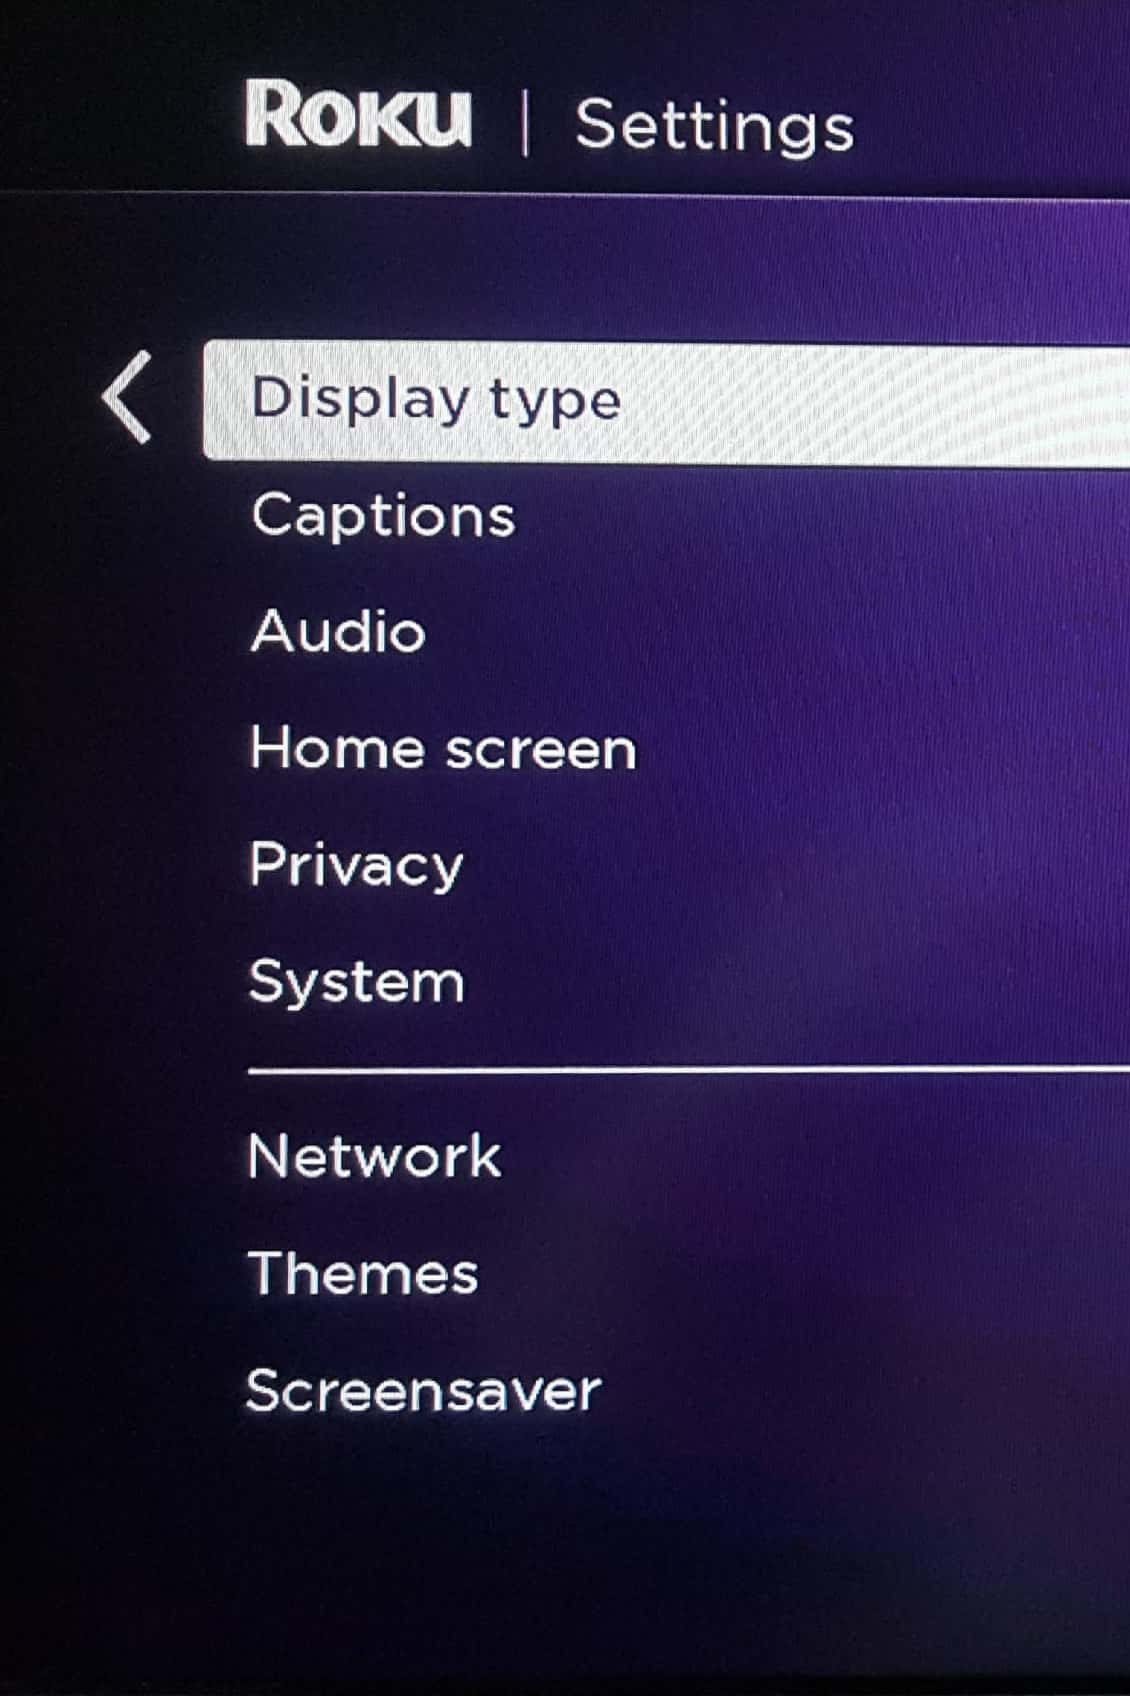 select display type to fix Roku black screen